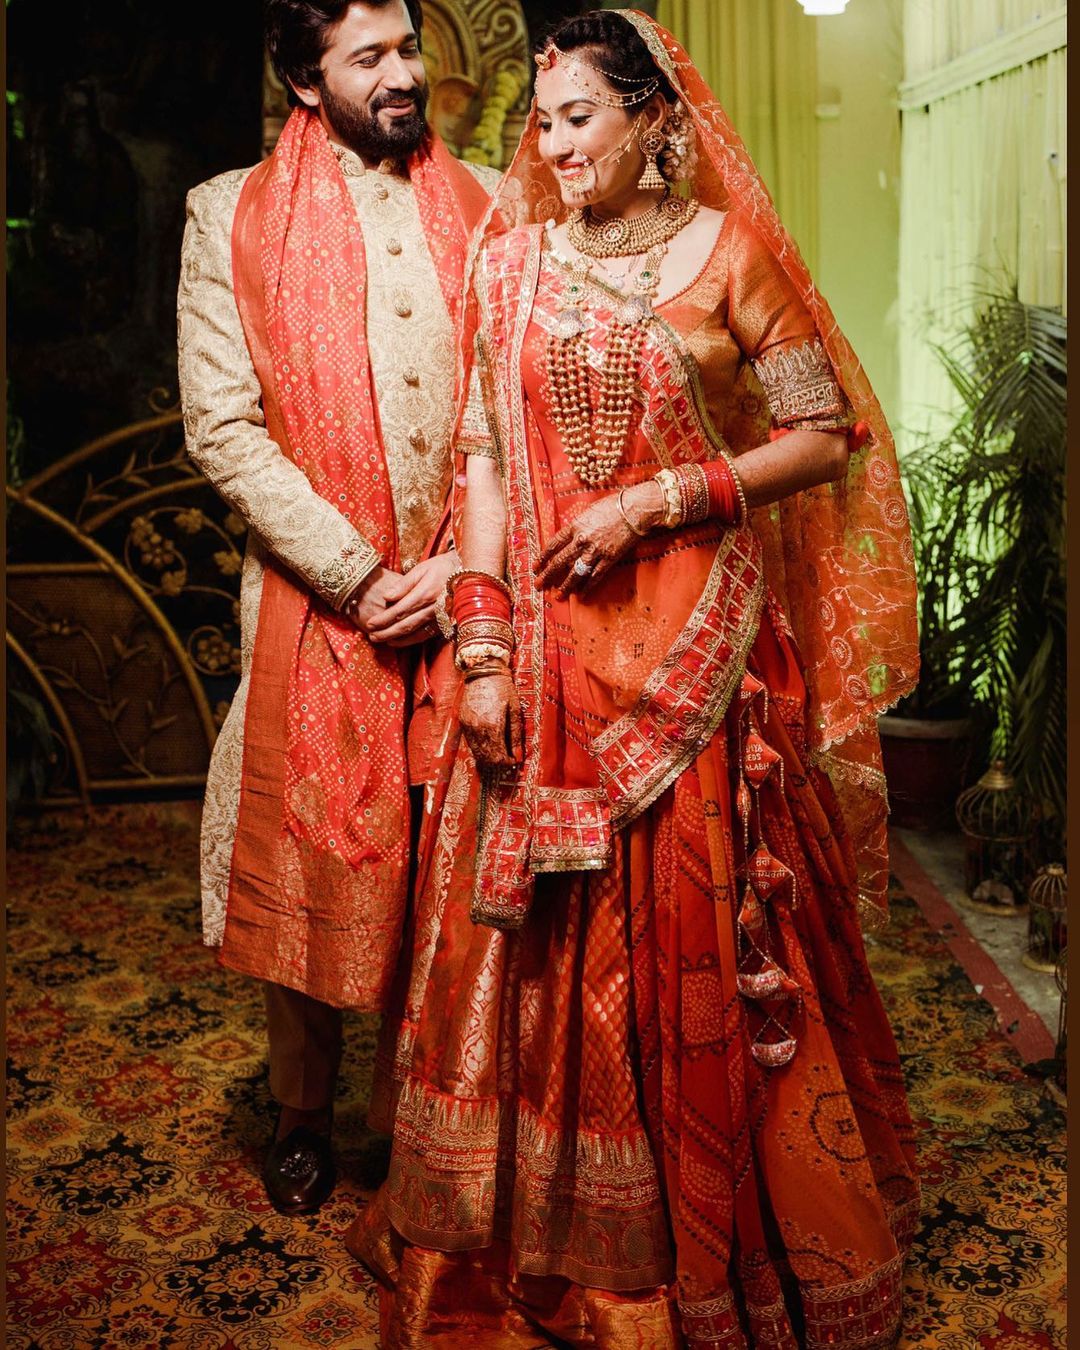 TV actress Kamya Panjabi celebrity wedding